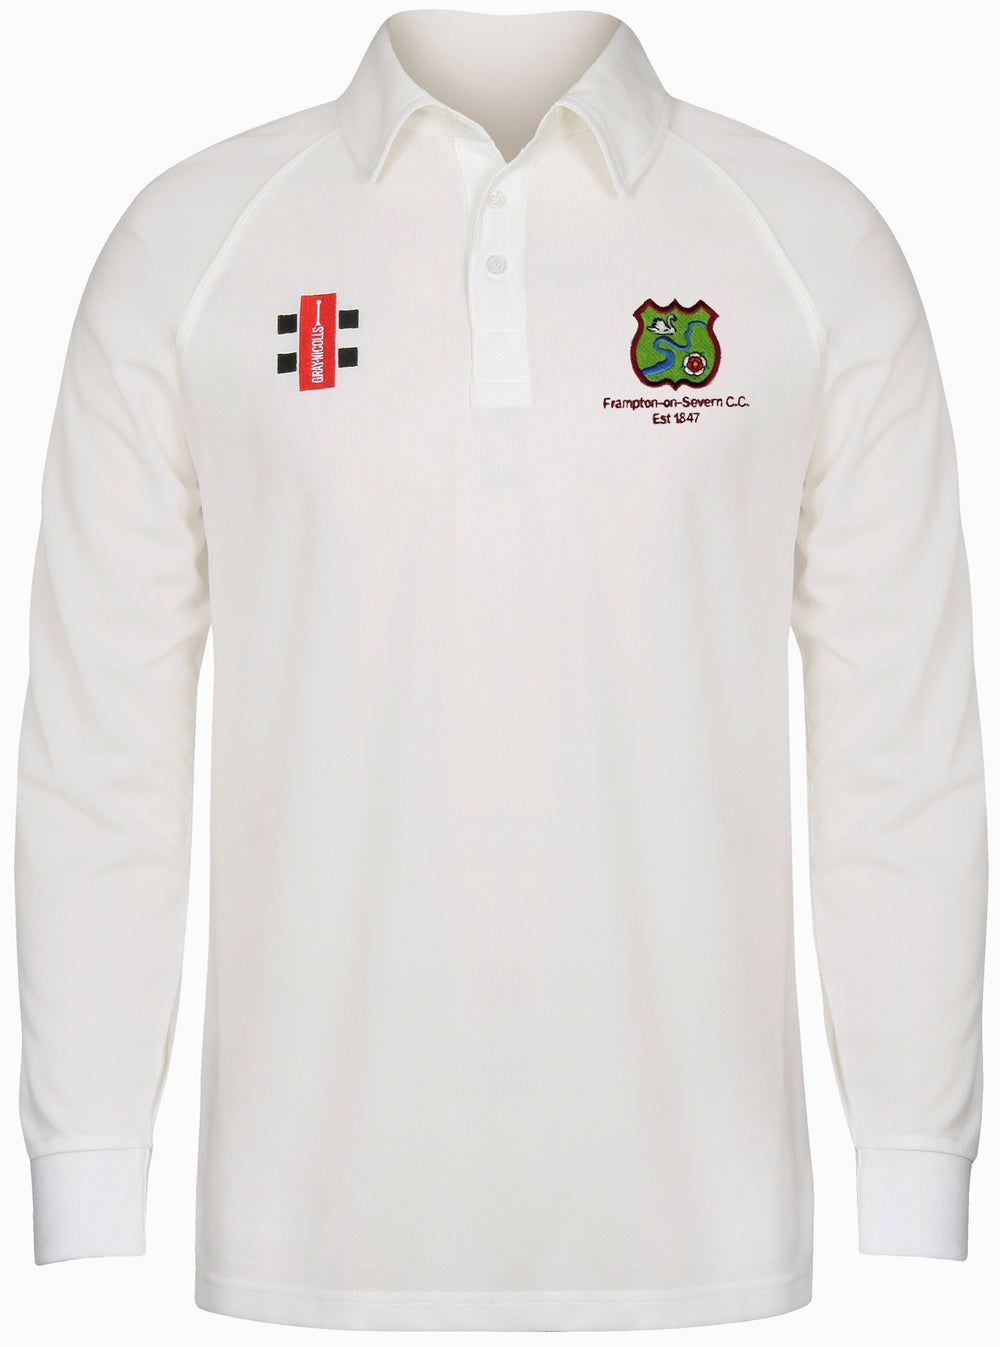 Frampton CC Matrix V2 Long Sleeve Senior Cricket Shirt